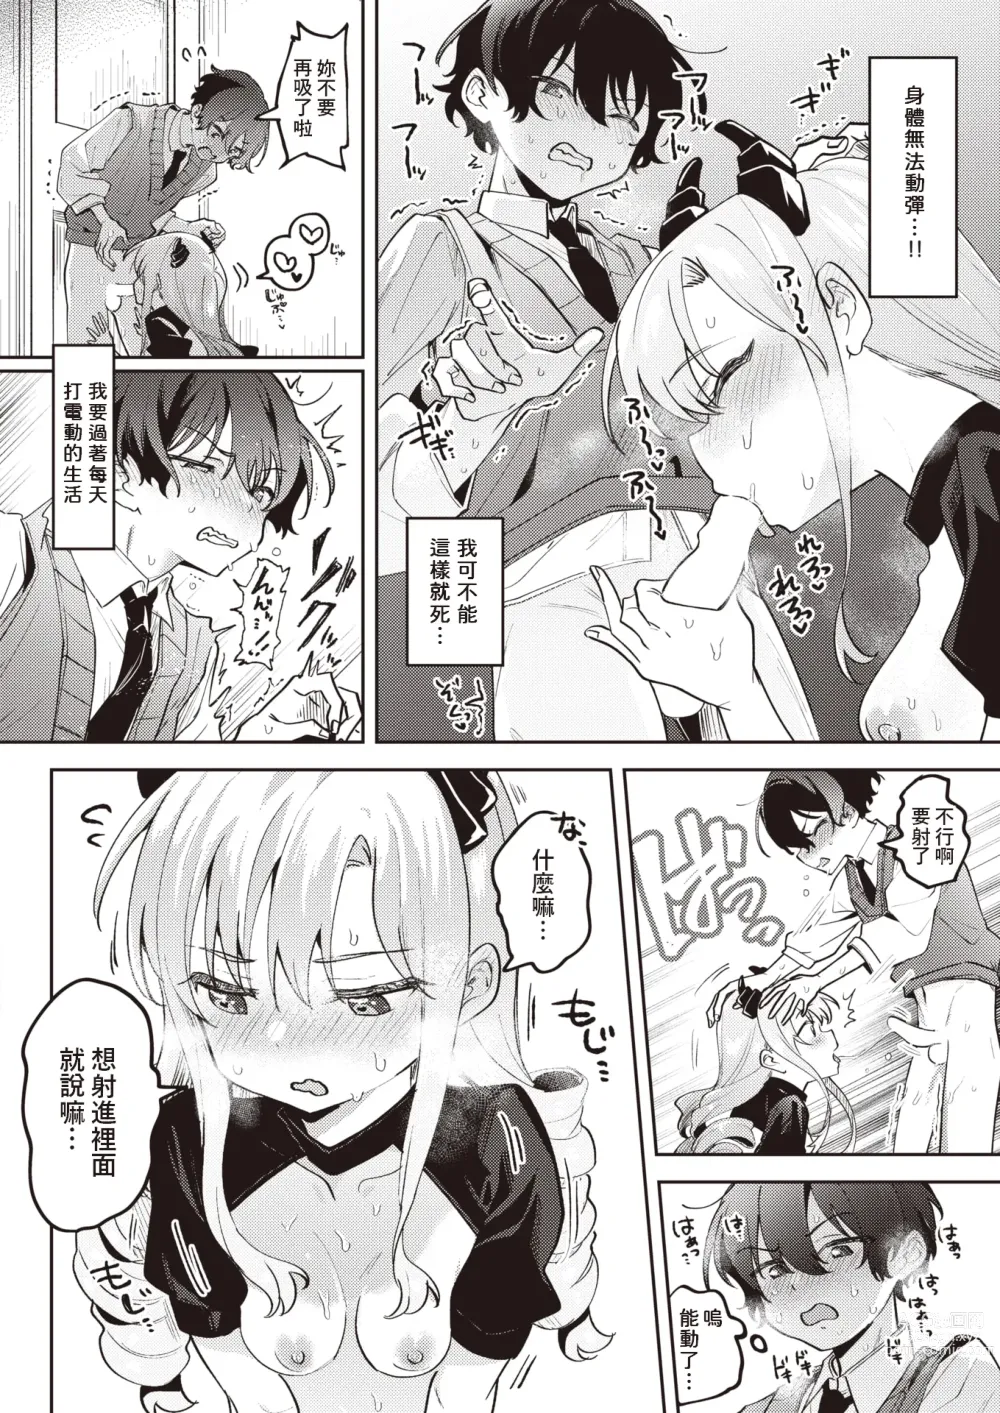 Page 16 of manga Succubus ♥ Education